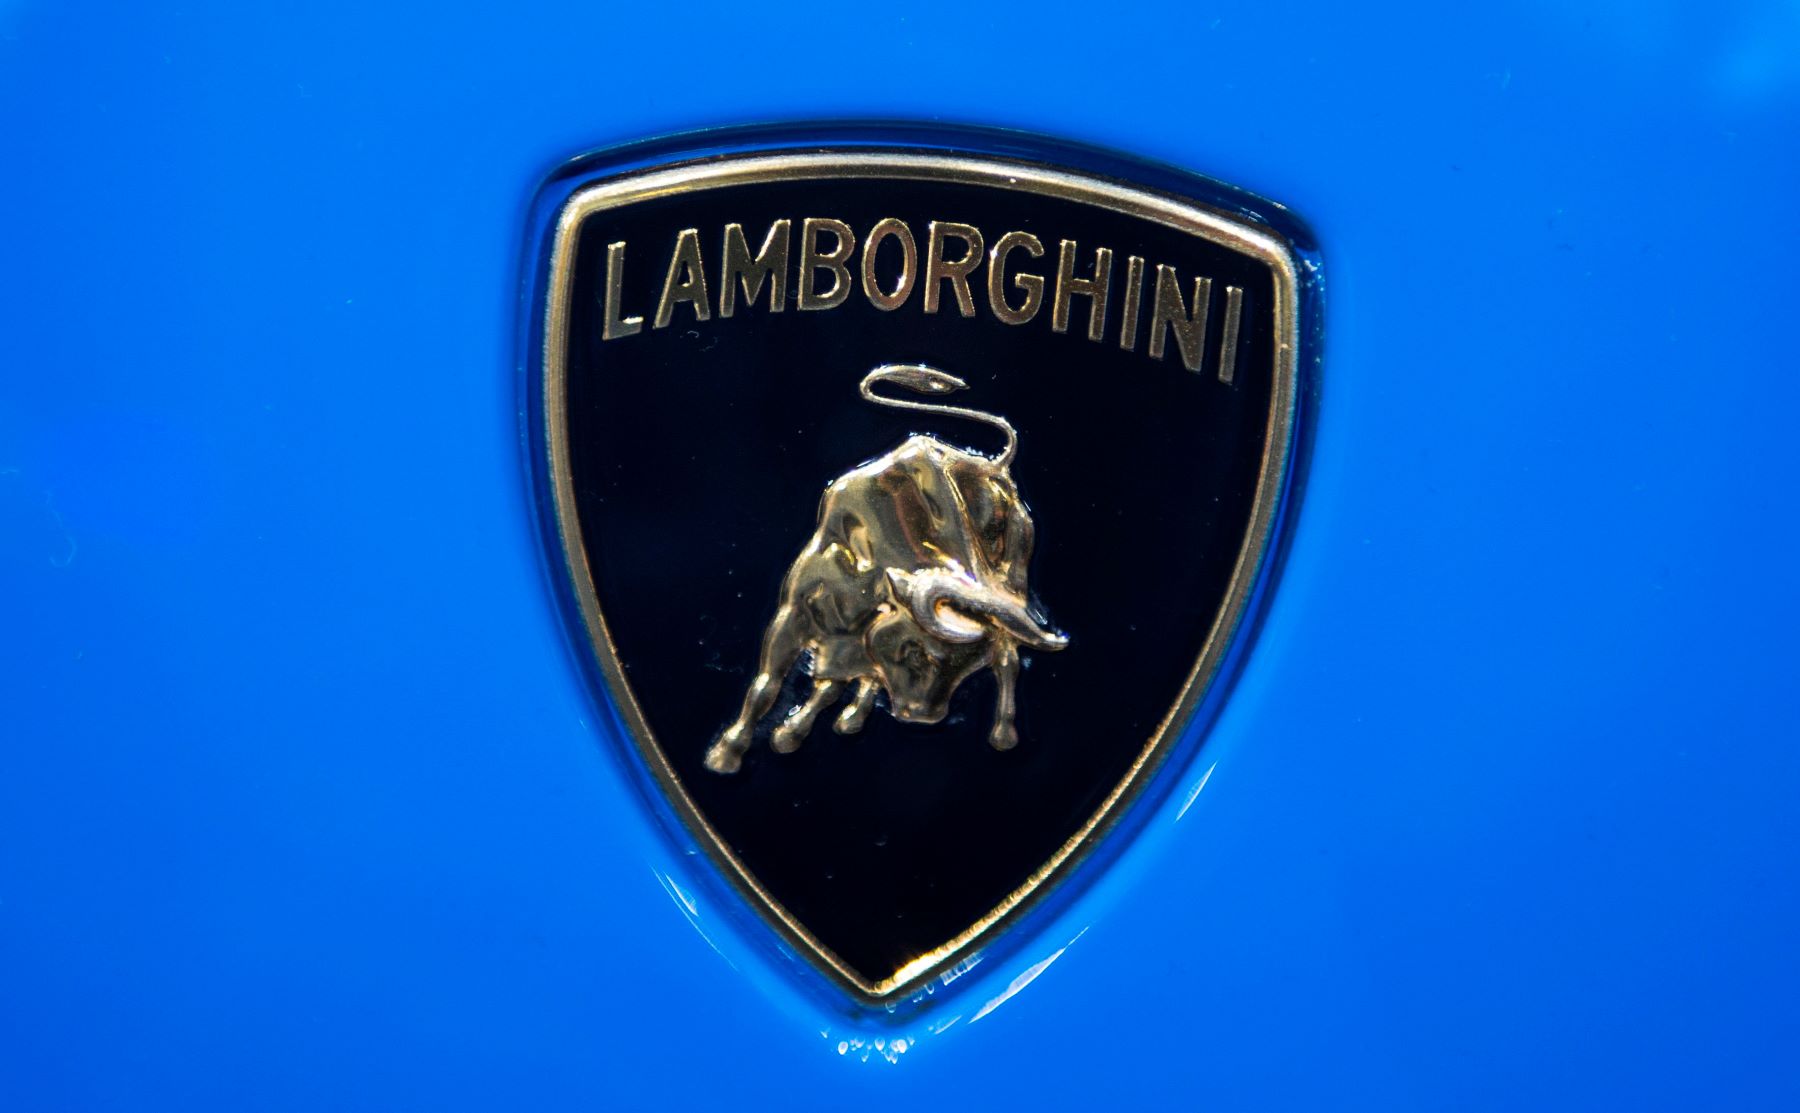 The Lamborghini logo badging on a Lamborghini Huracan model seen at the International Motor Show (IAA) in Germany